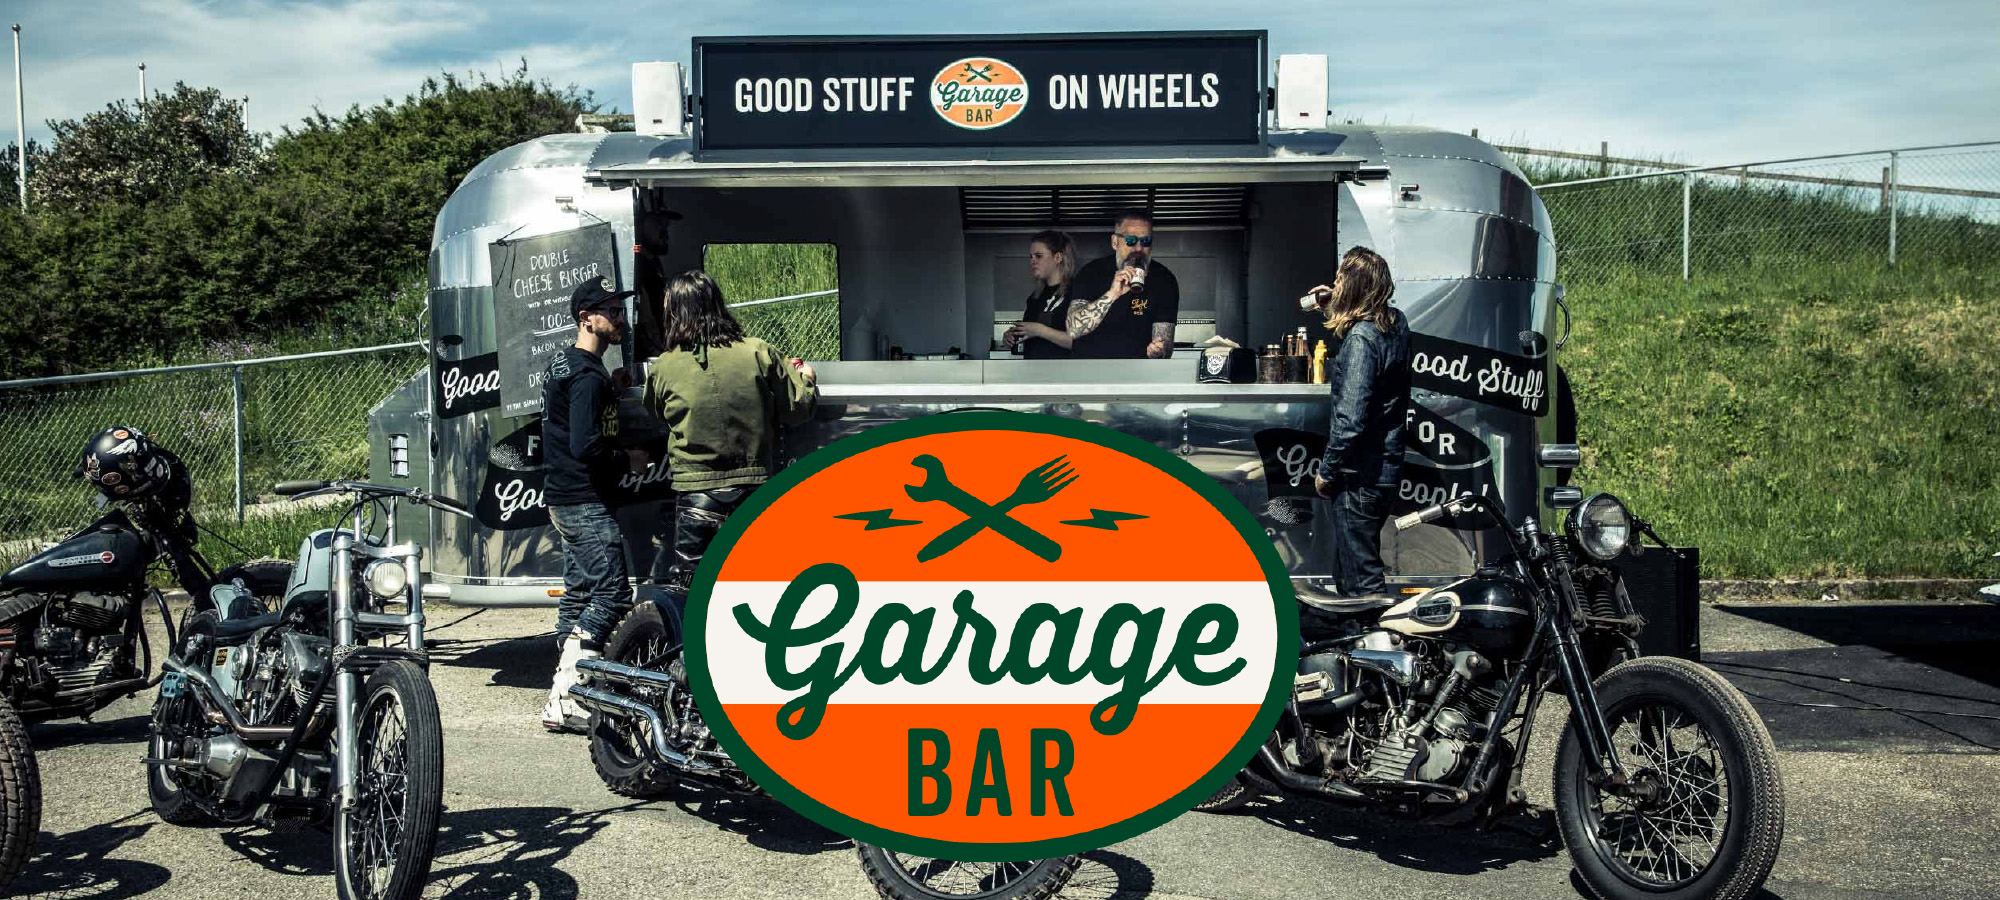 Food Truck - GARAGE BAR